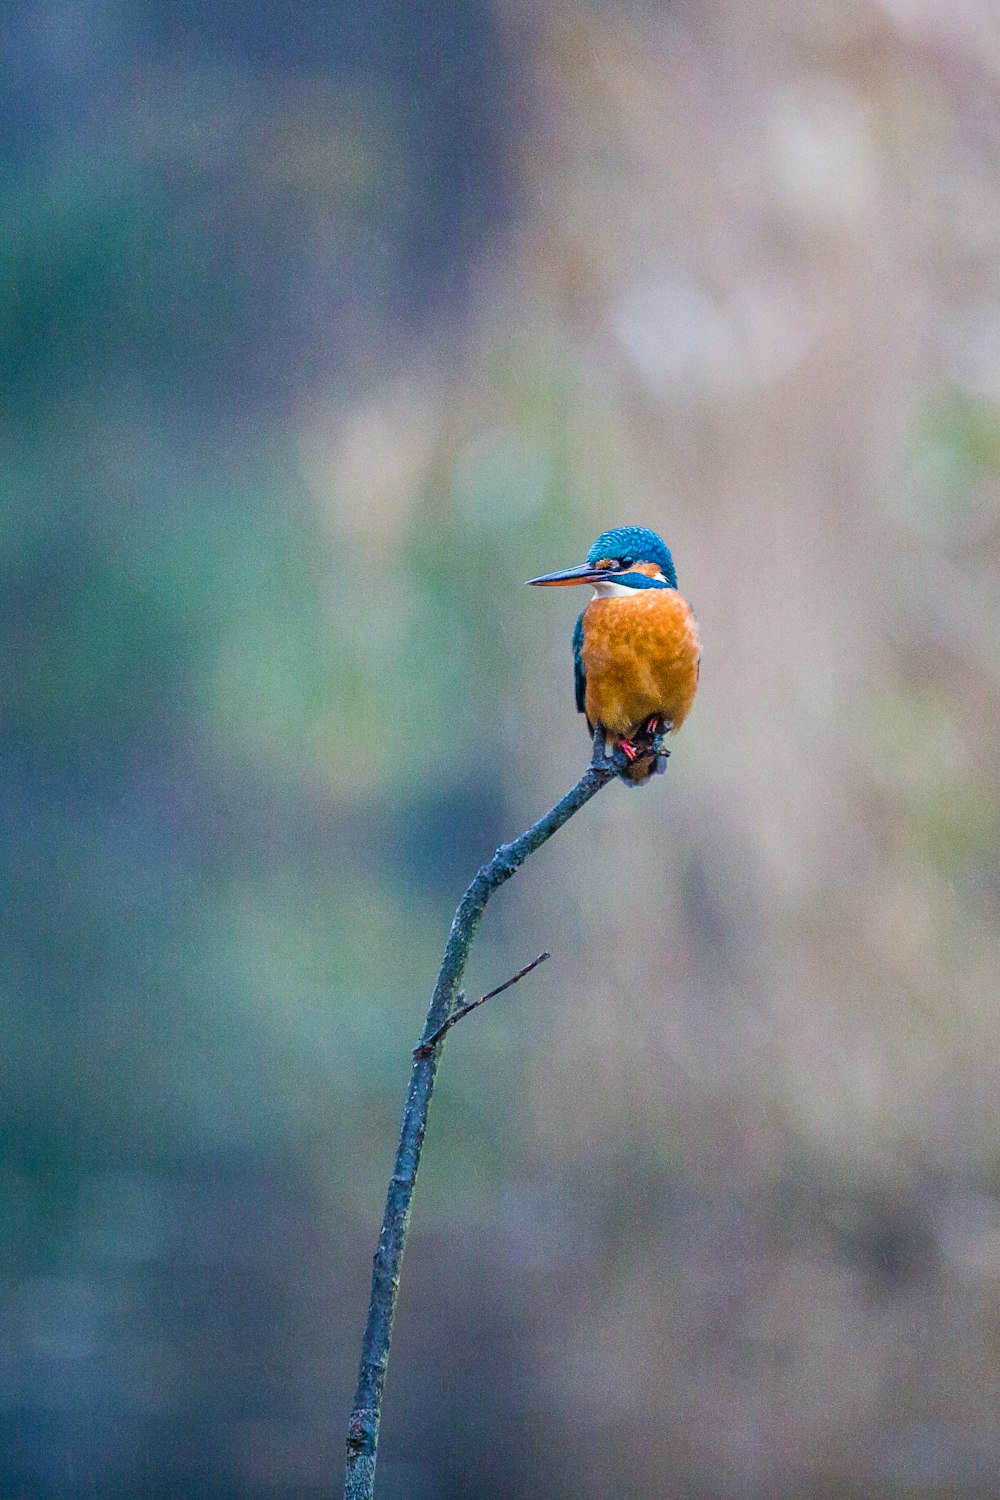 a small blue and orange bird sitting on a twig